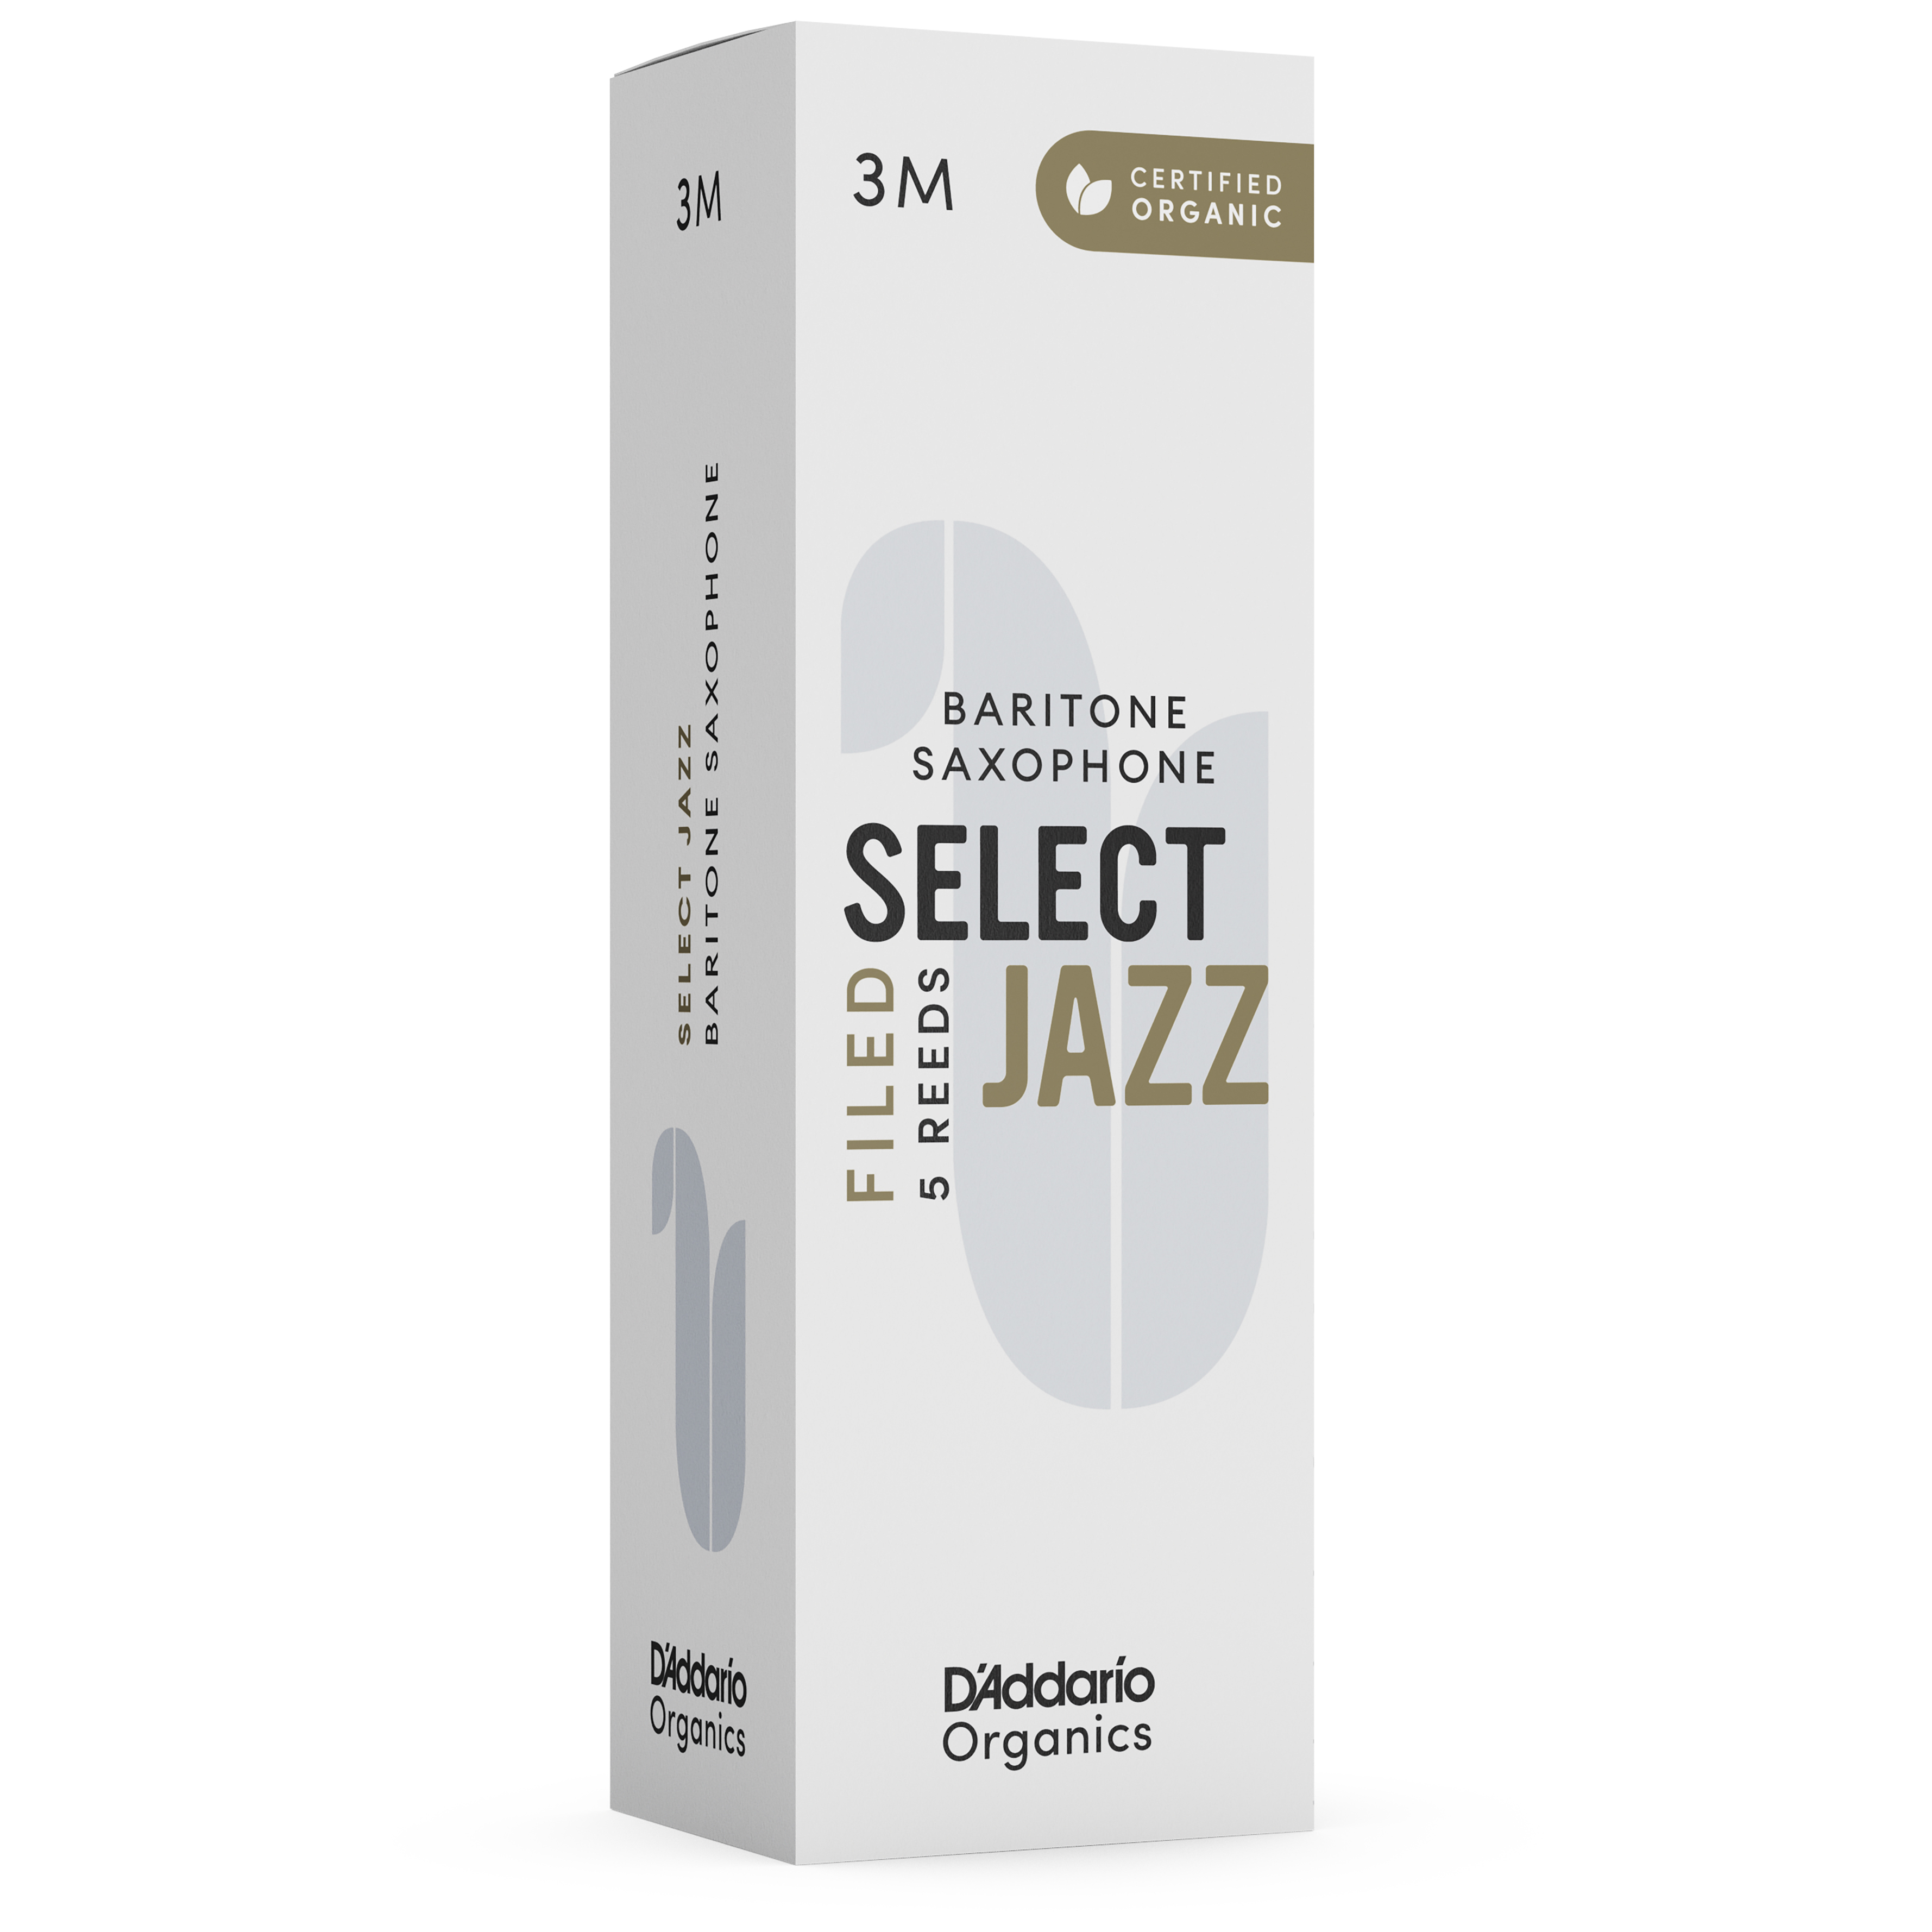 D’Addario Woodwinds Organic Select Jazz Filed - Bariton Saxophone 3M - 5er Pack 3